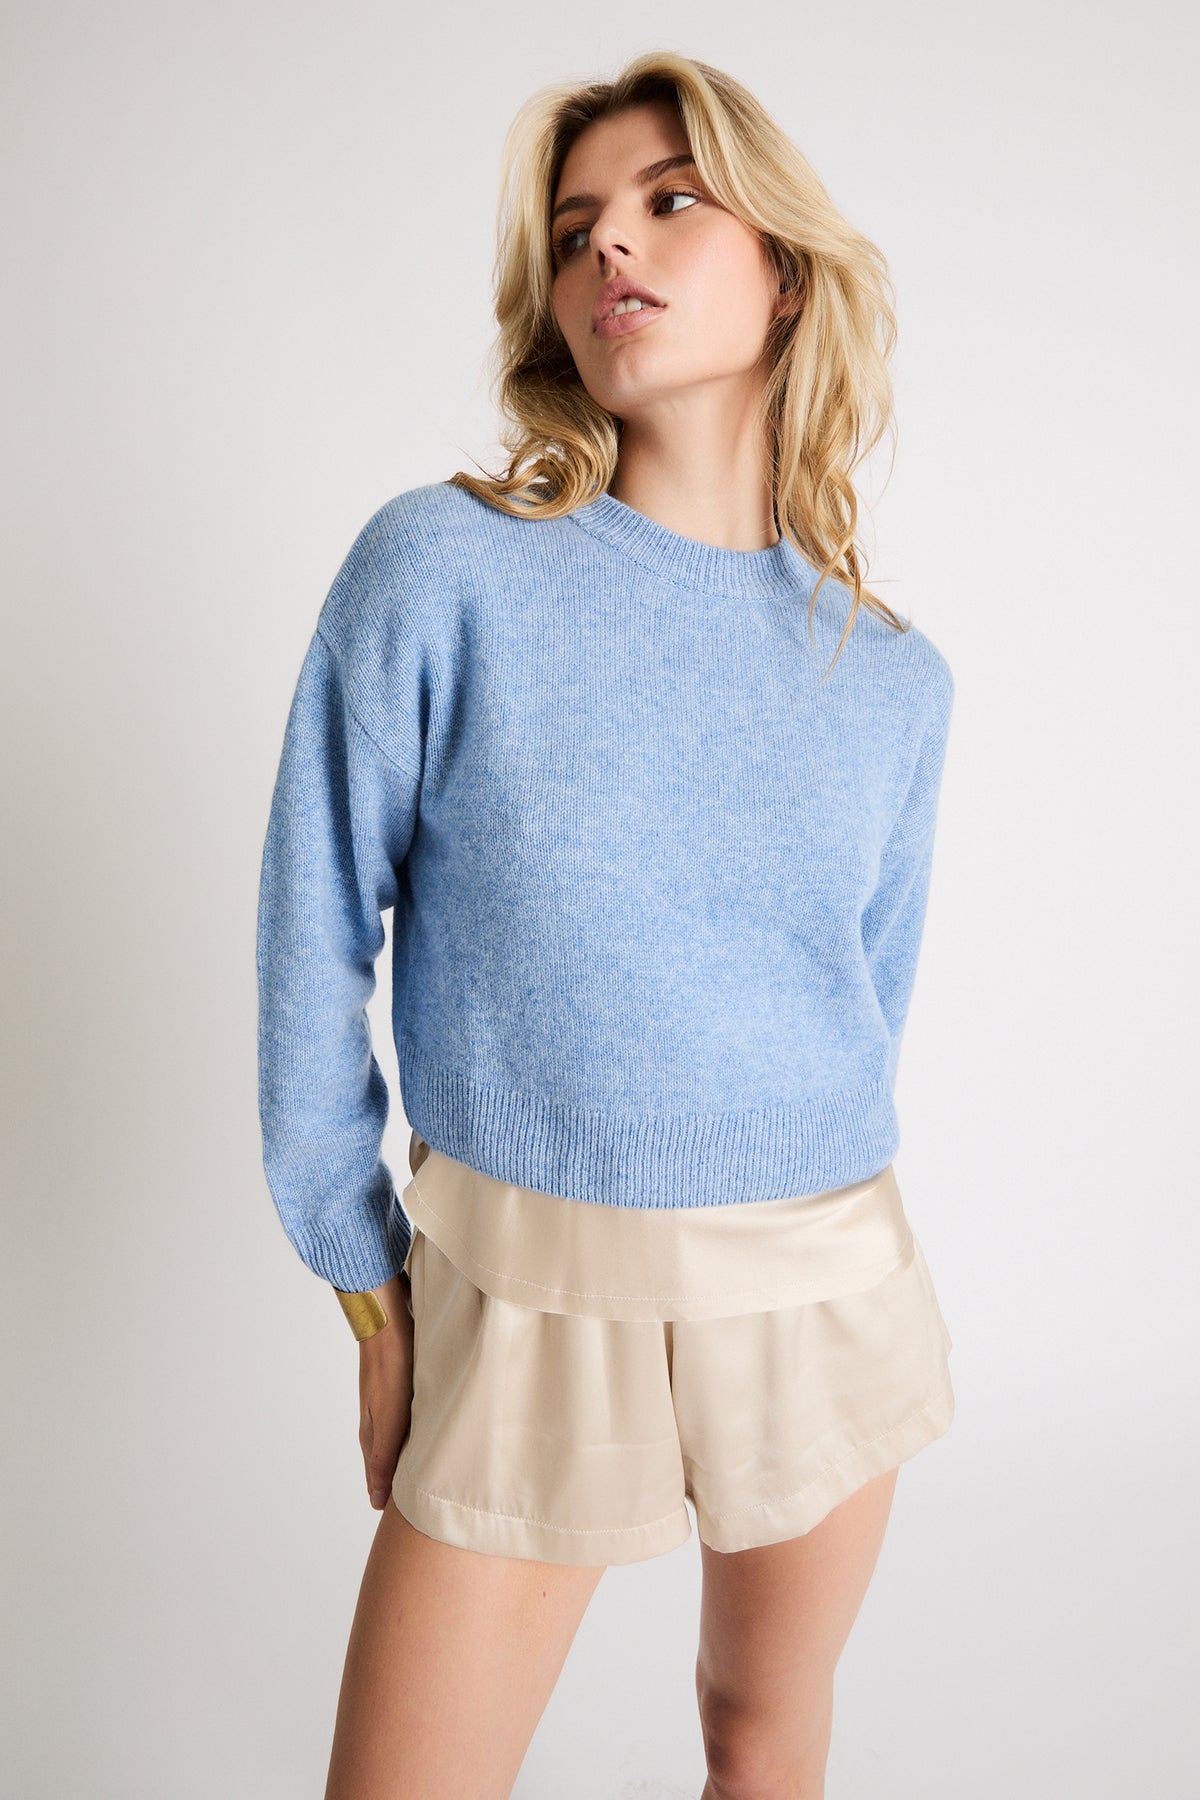 +Beryll Cashmere Sweater Madison | Sky Blue - +Beryll Cashmere Sweater Madison | Sky Blue - +Beryll Worn By Good People